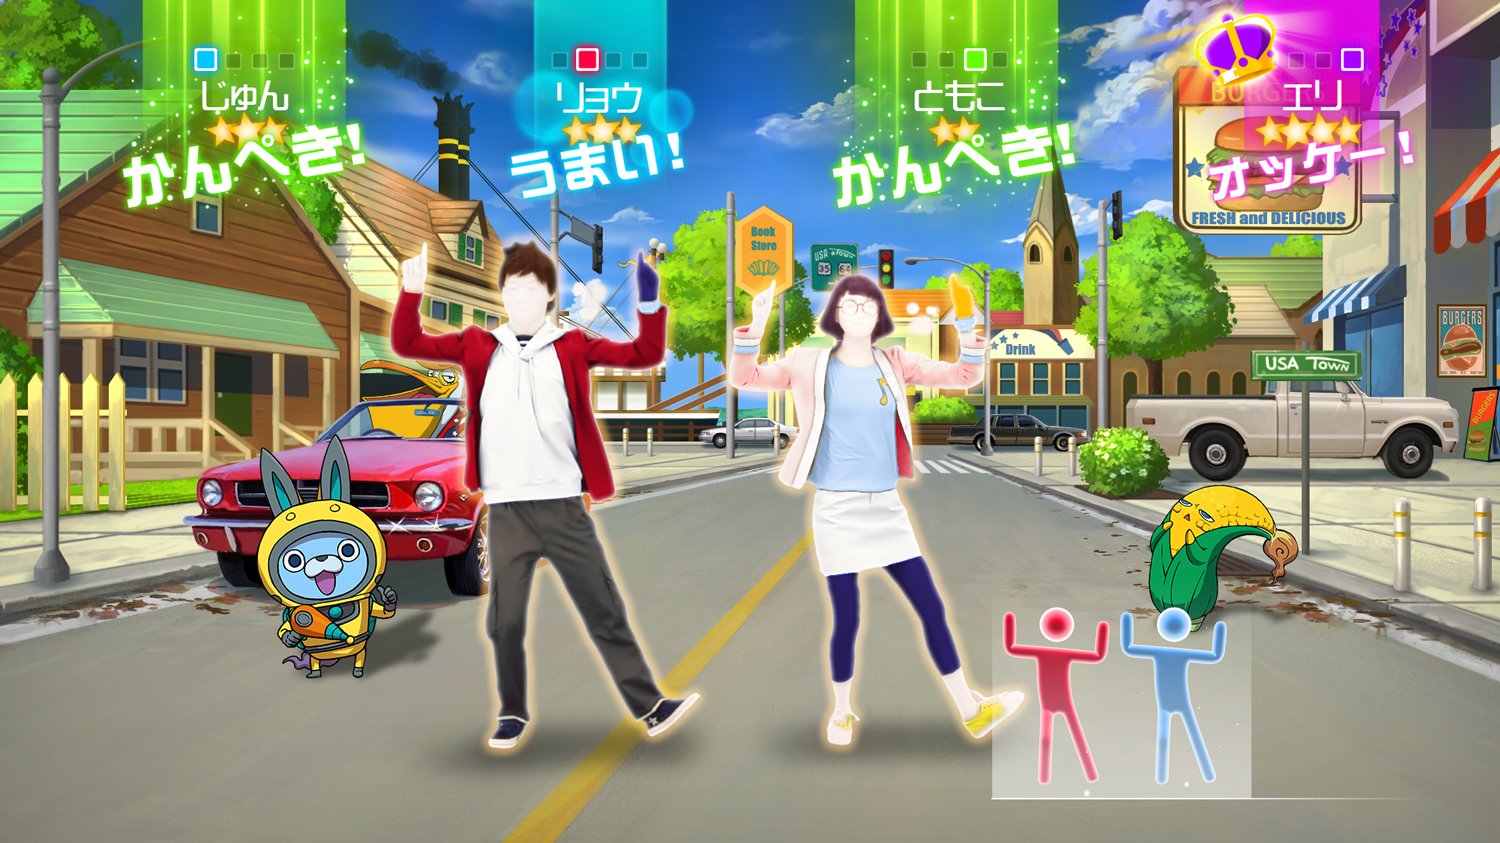 Yo-kai Watch Dance launches December 5 in Japan - Gematsu